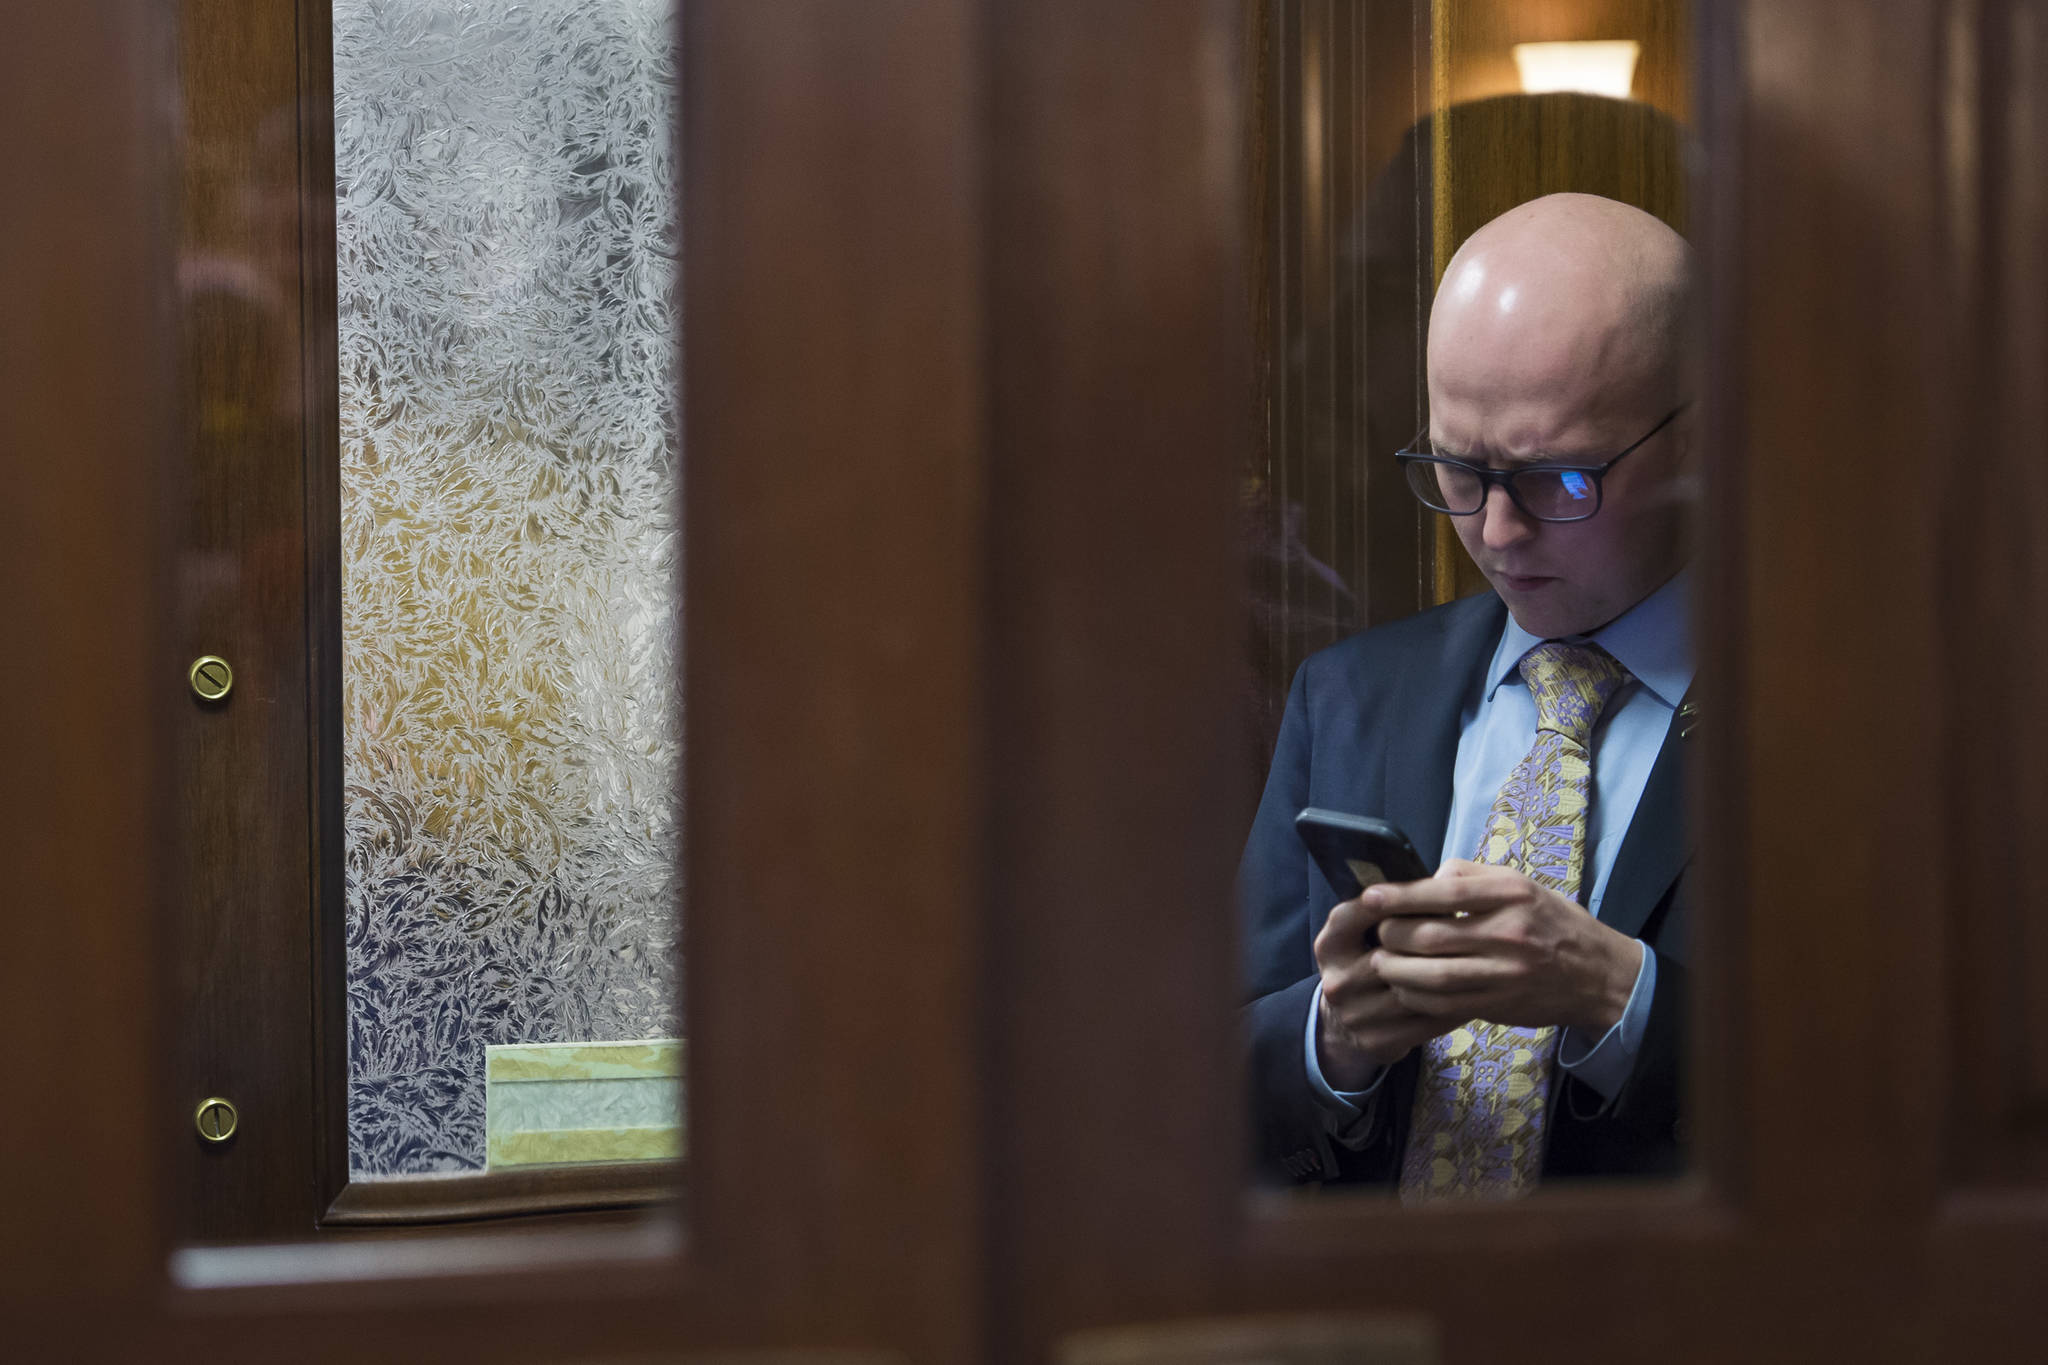 Hello? Cellphones banned on Senate floor